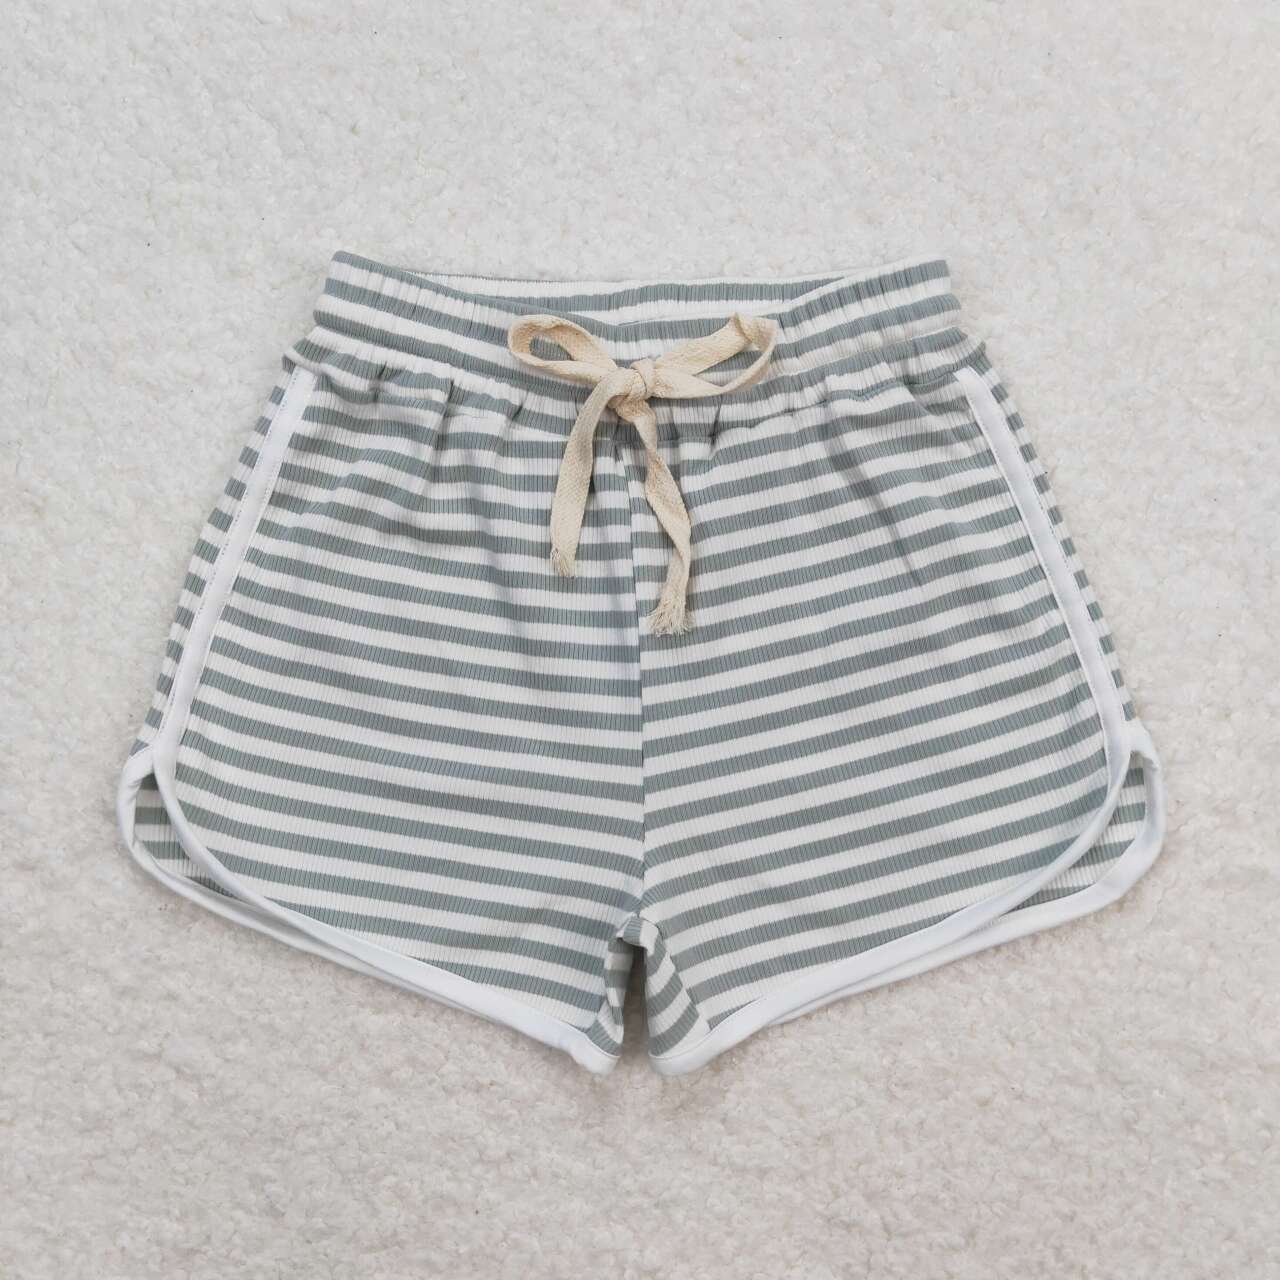 SS0328 Striped gray-blue shorts